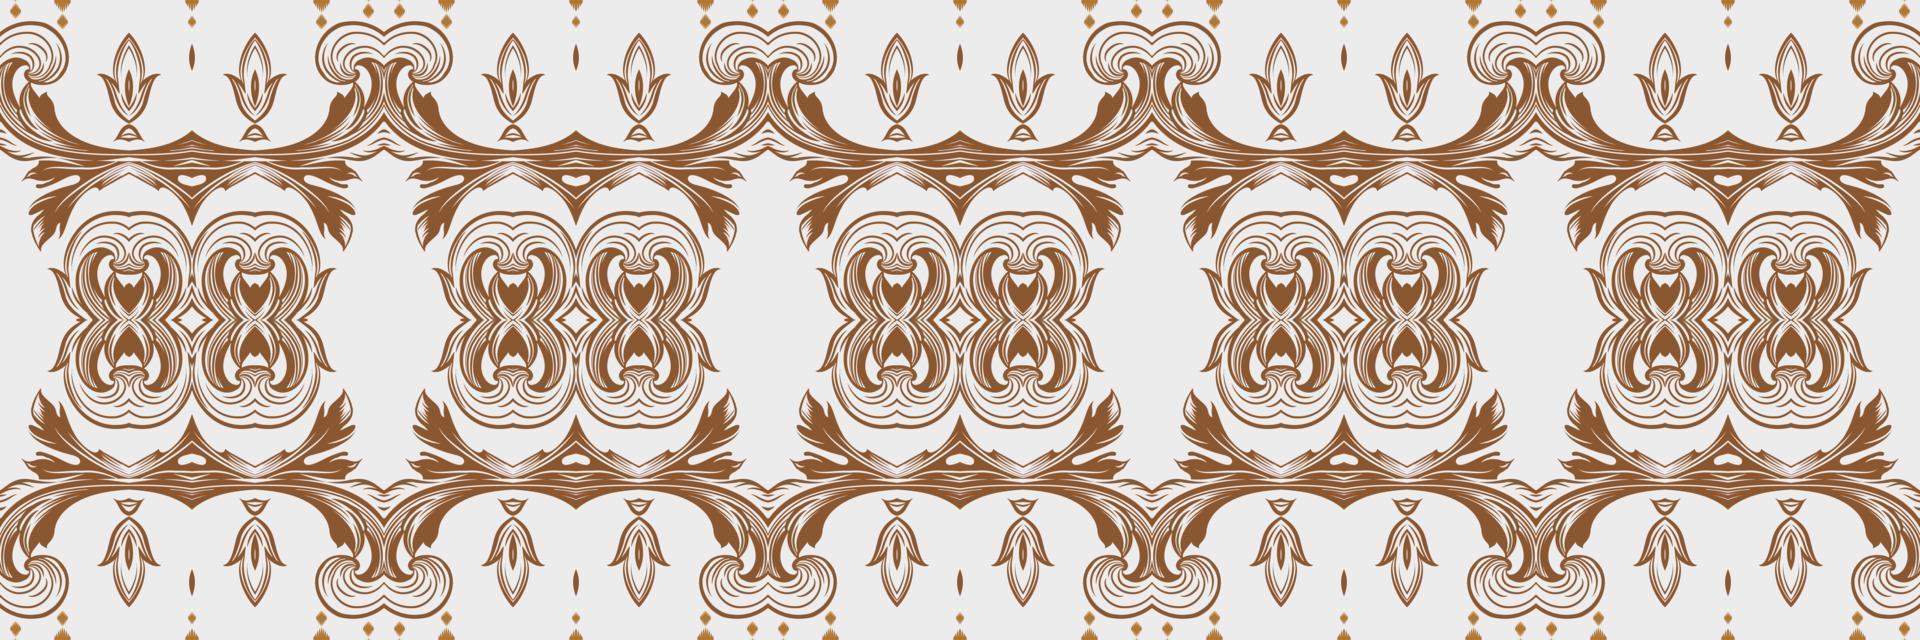 ikat borde tribal africano patrón sin costuras. étnico geométrico batik ikkat vector digital diseño textil para estampados tela sari mogol cepillo símbolo franjas textura kurti kurtis kurtas